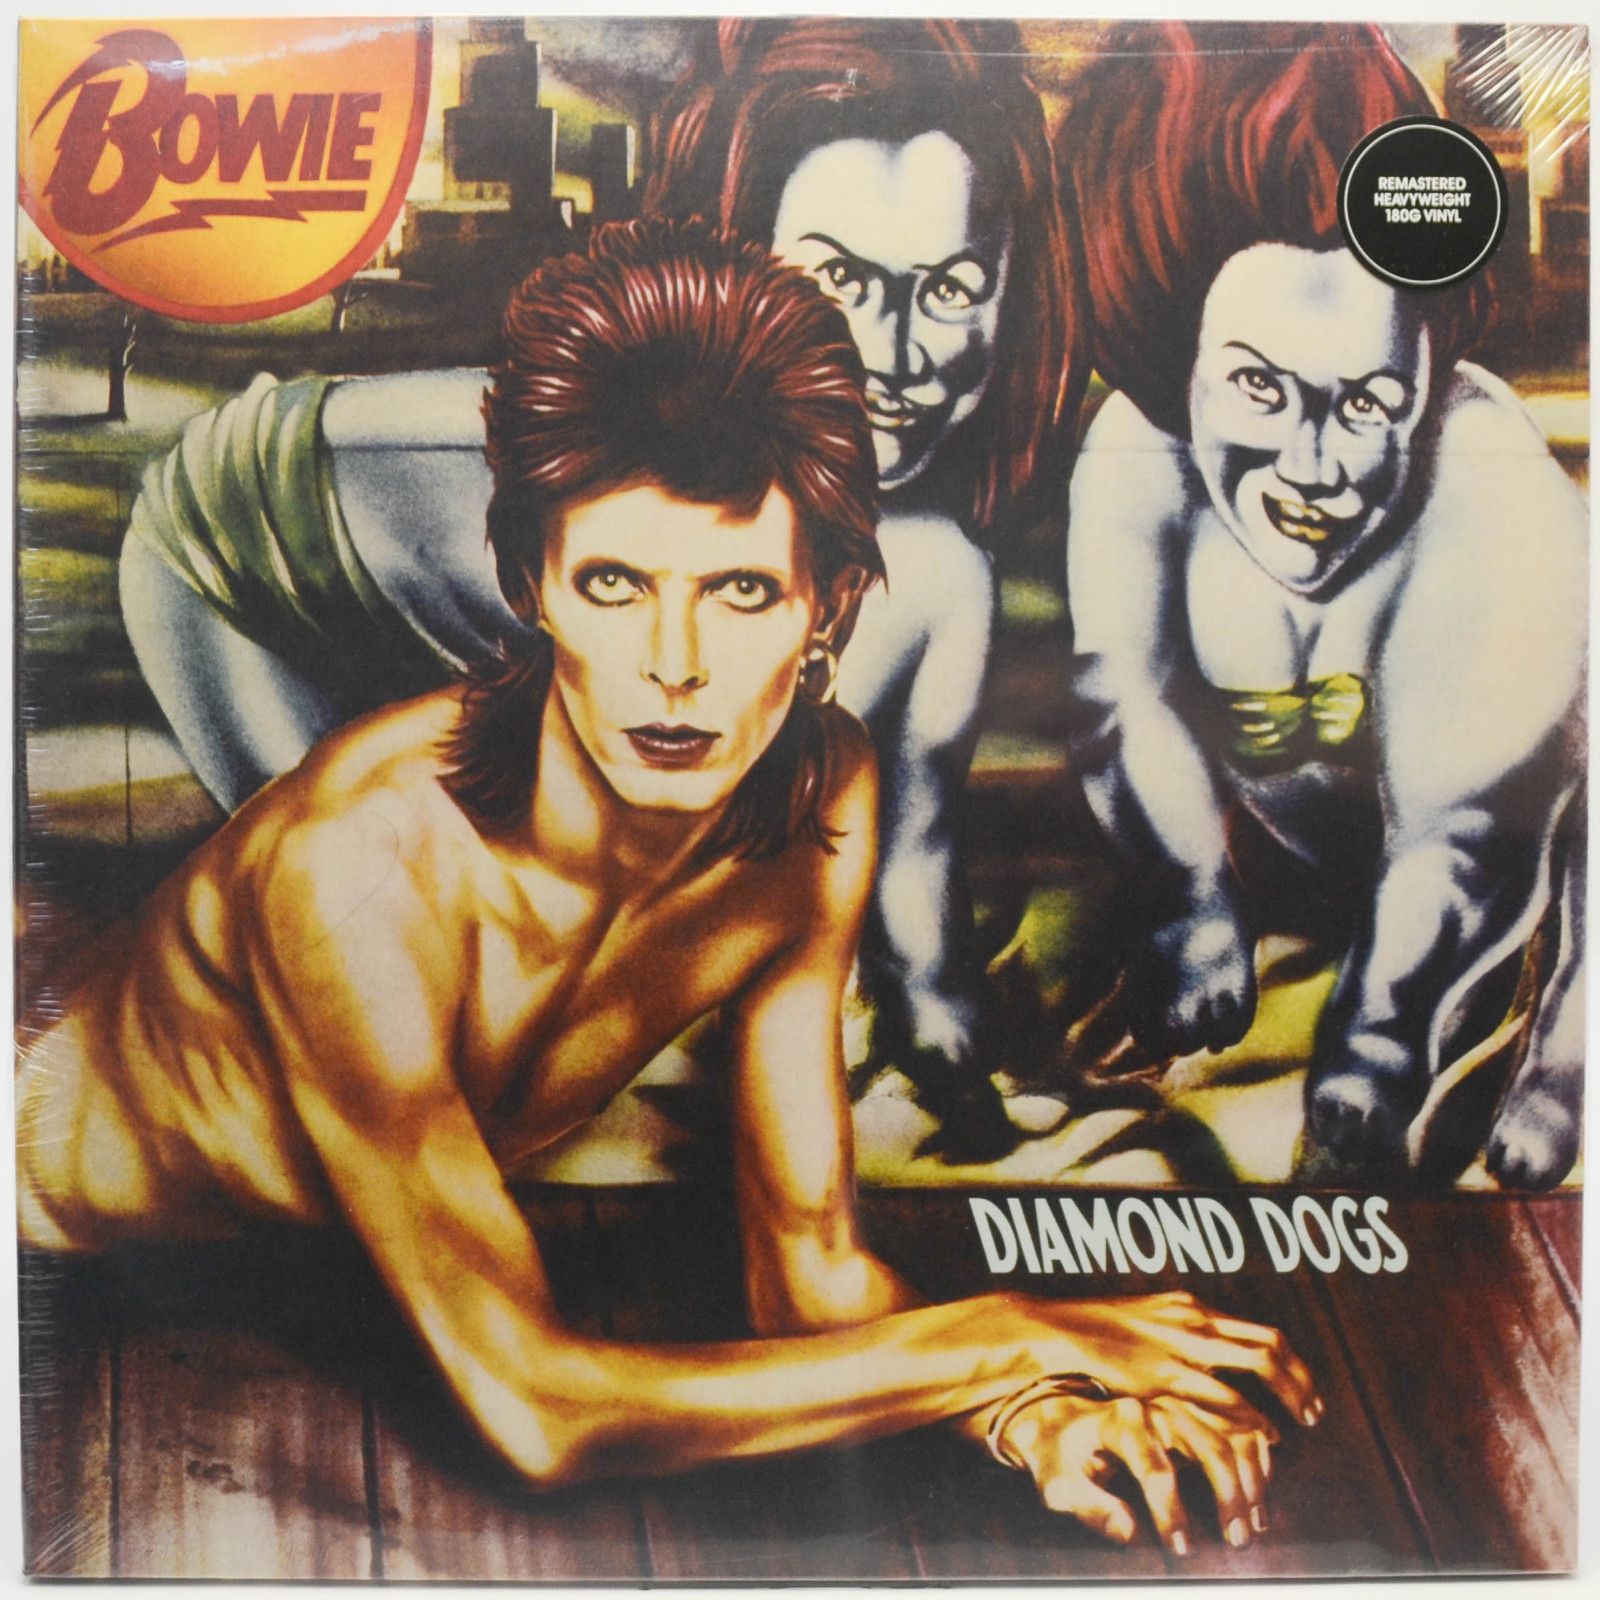 Bowie — Diamond Dogs, 1982